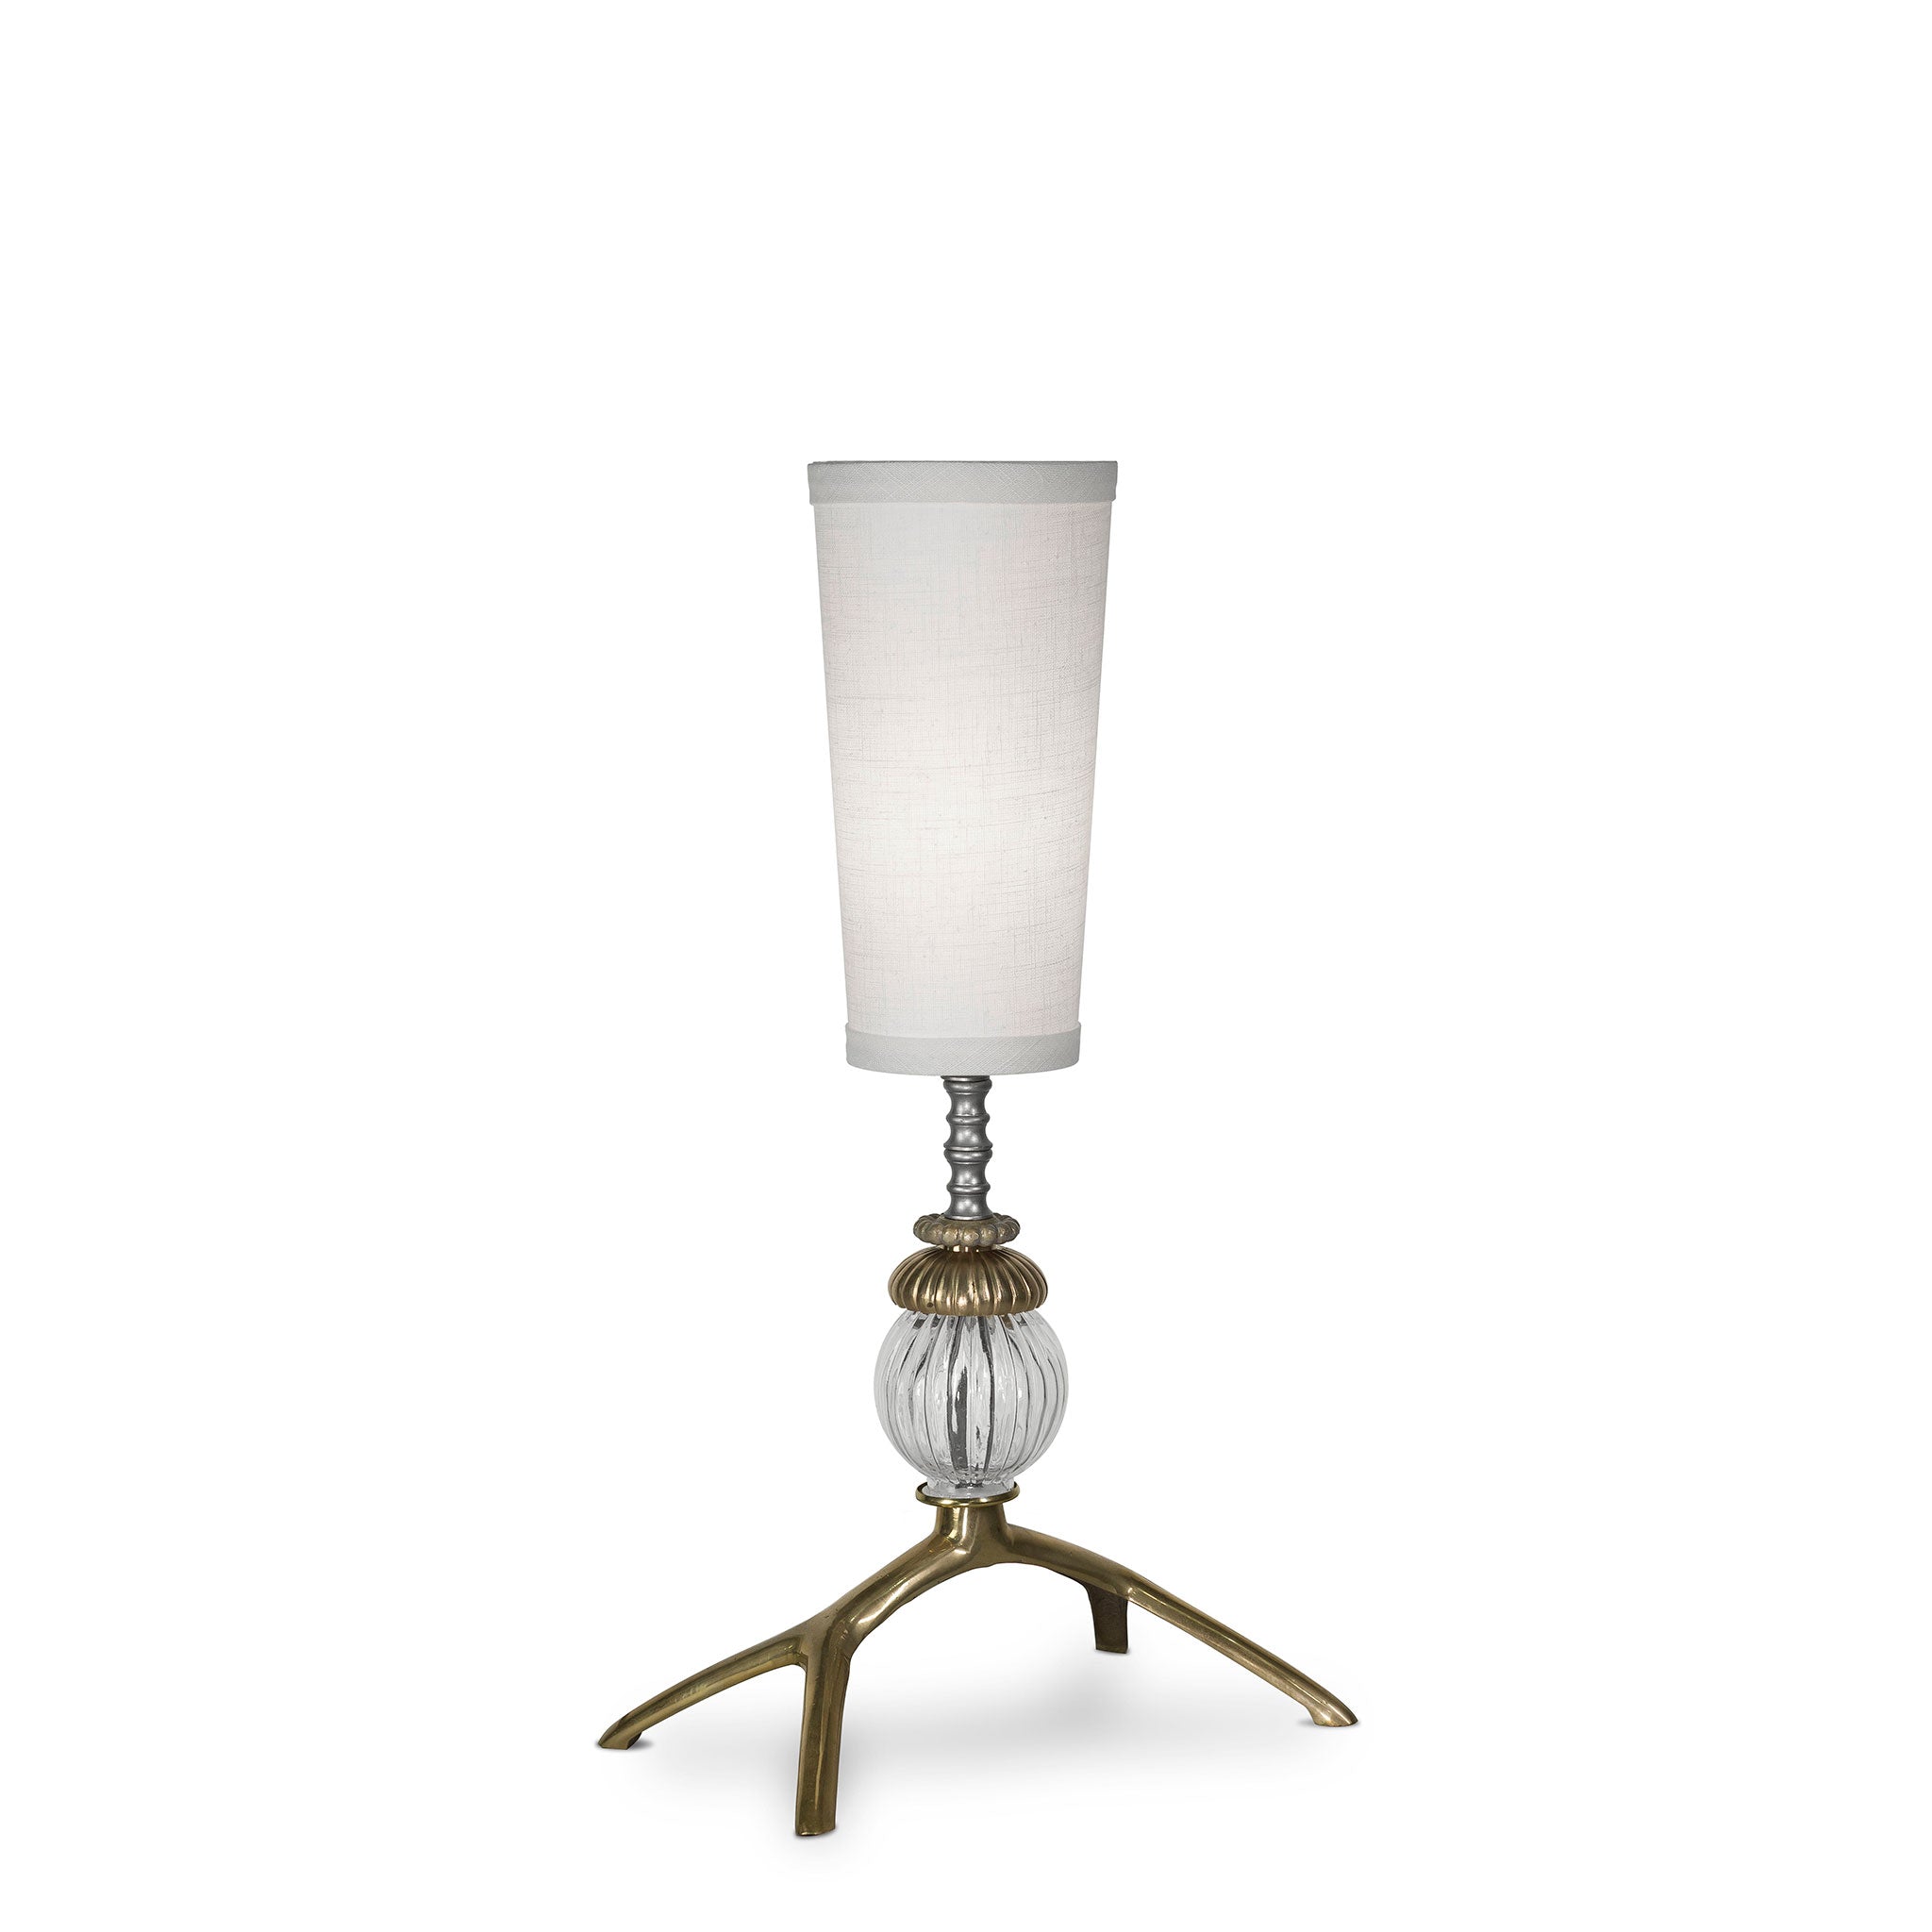 Maeve Mini Table Lamp, Solid Brass, Handblown Clear Glass by Luna Bella